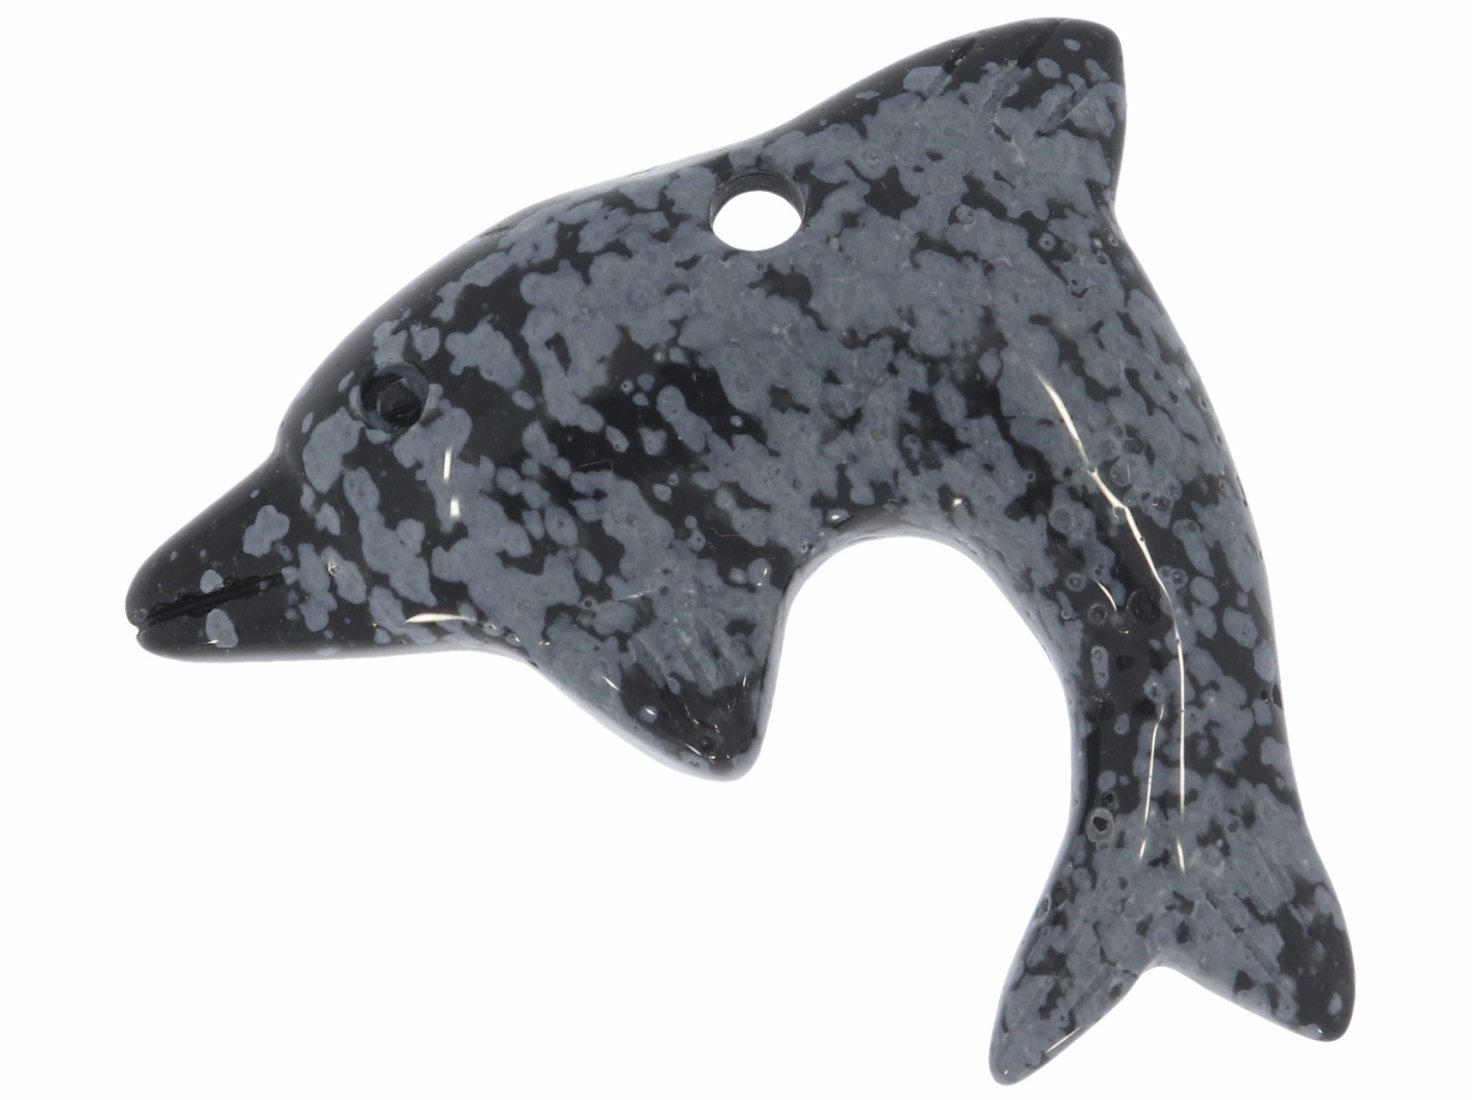 Delphin Anhänger aus Schneeflocken Obsidian front gebohrt 50x30 HS650